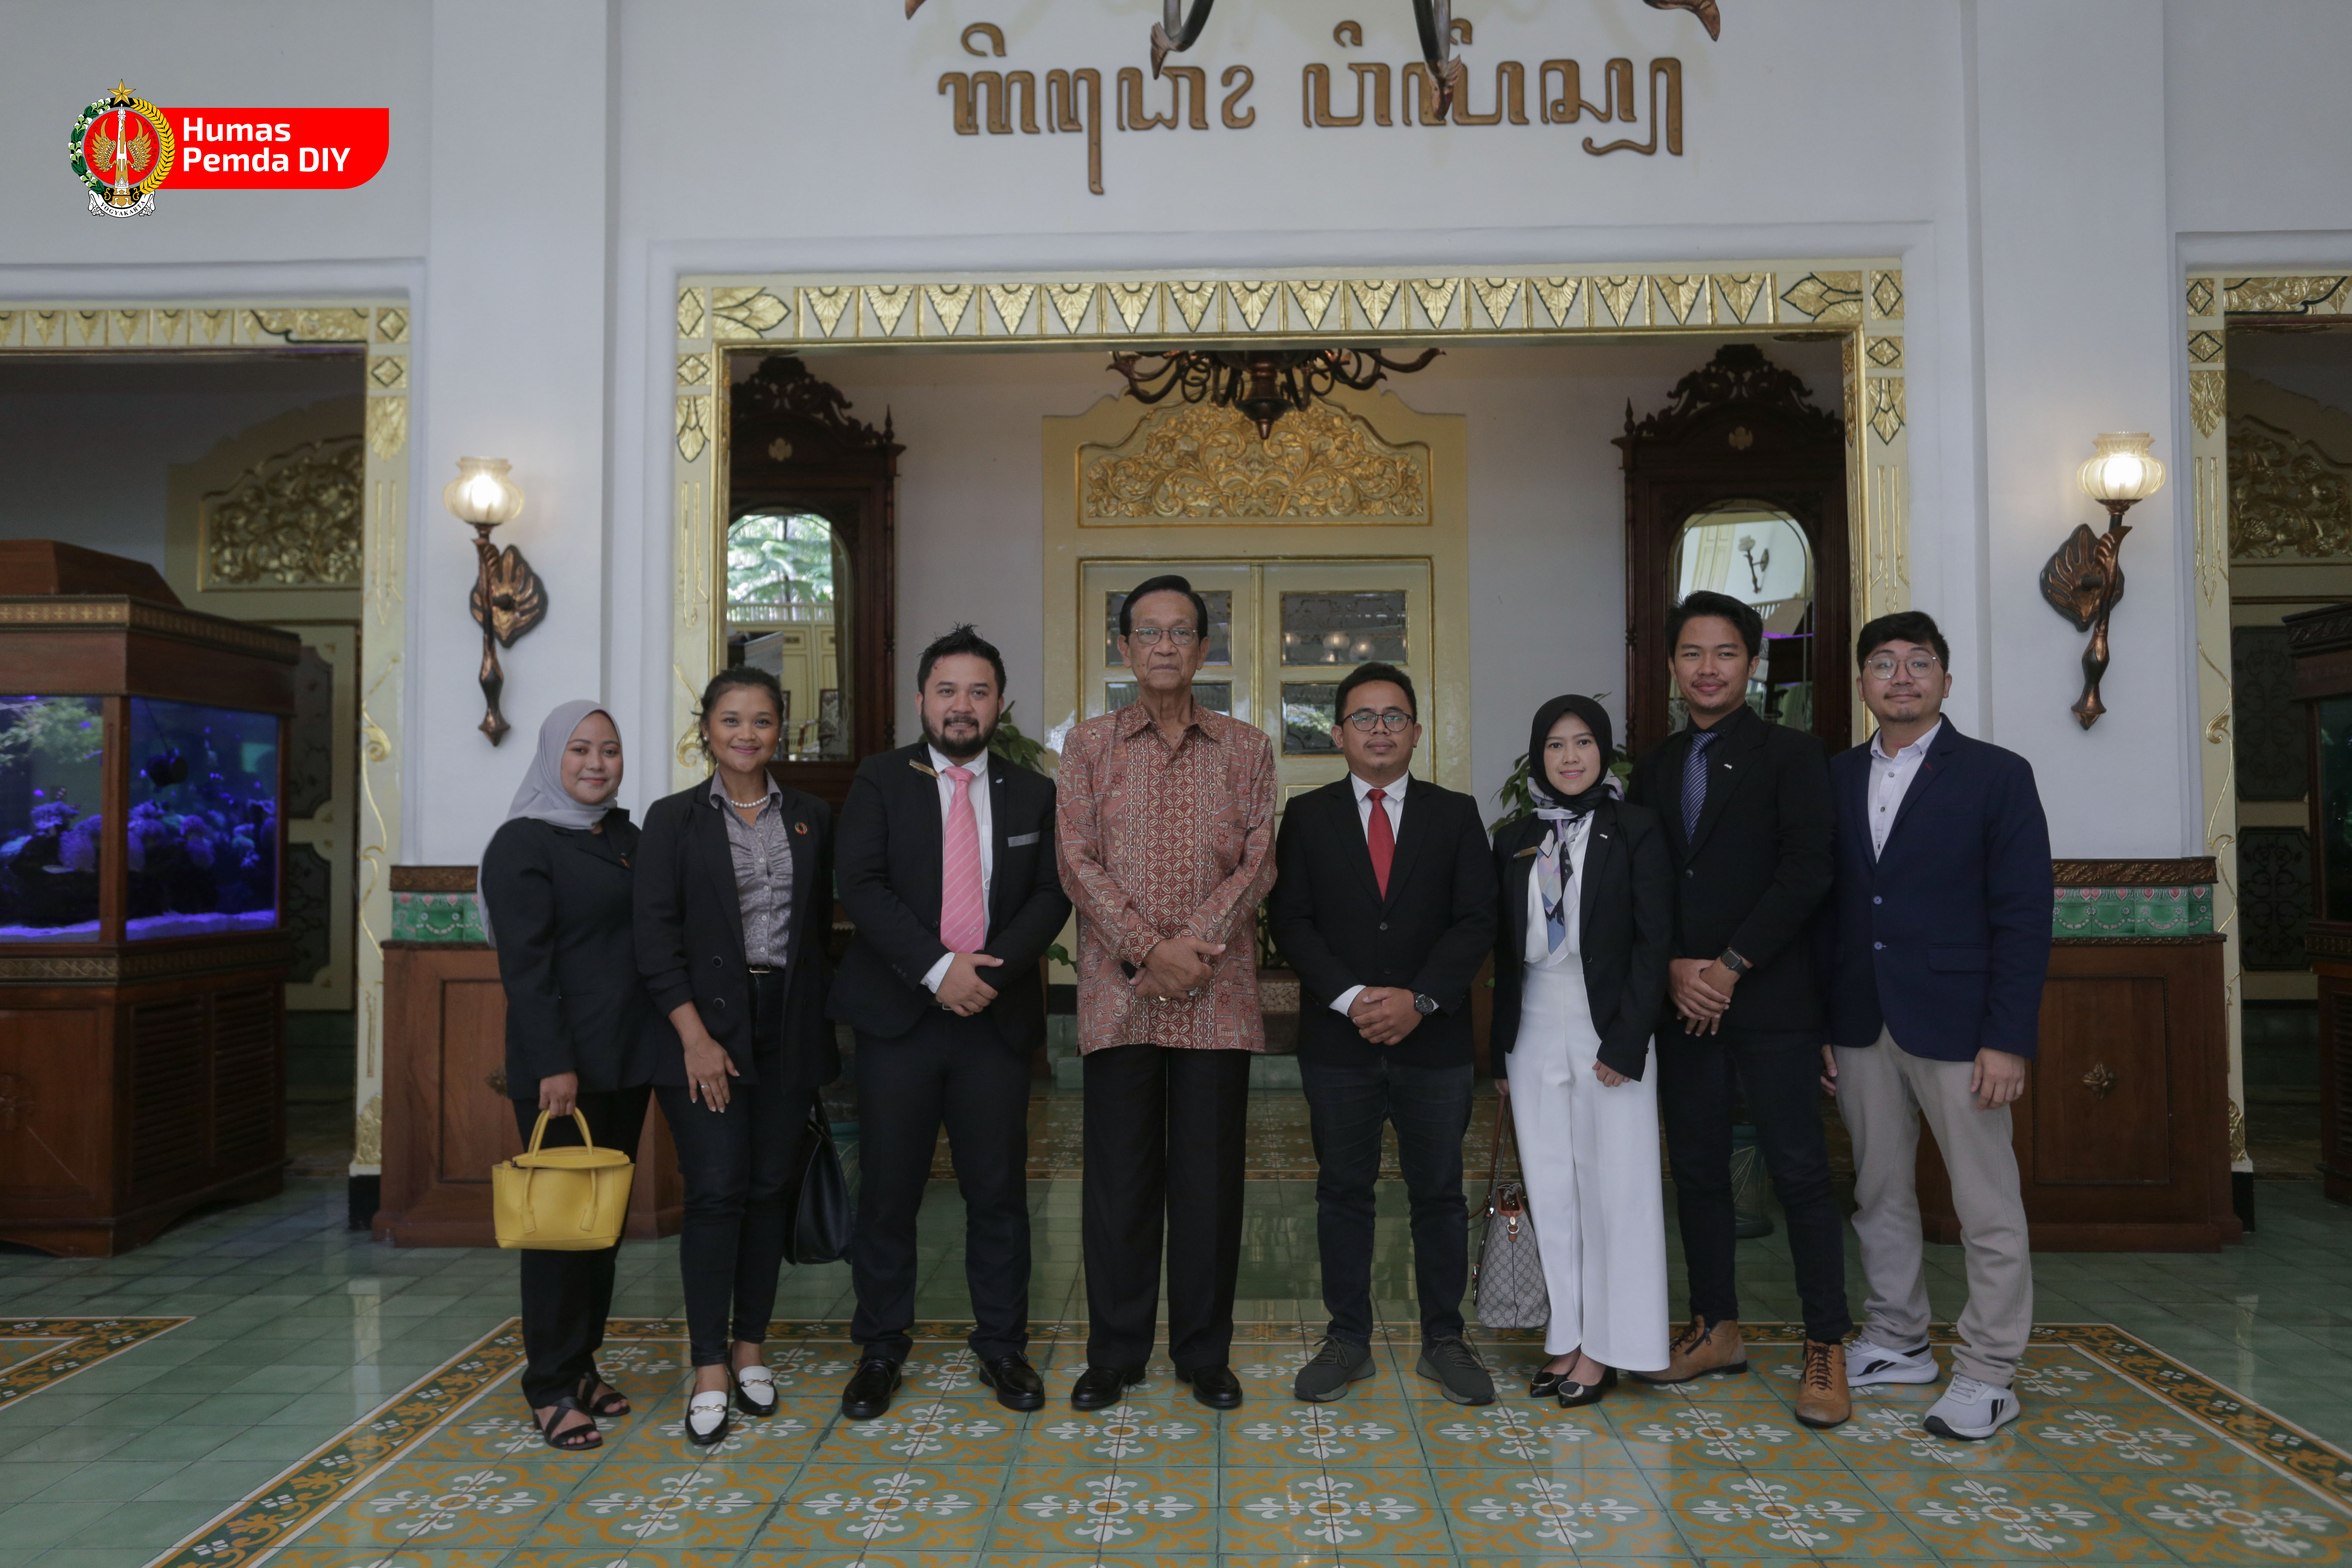 Kunjungan Jogja Chamber International Yogyakarta